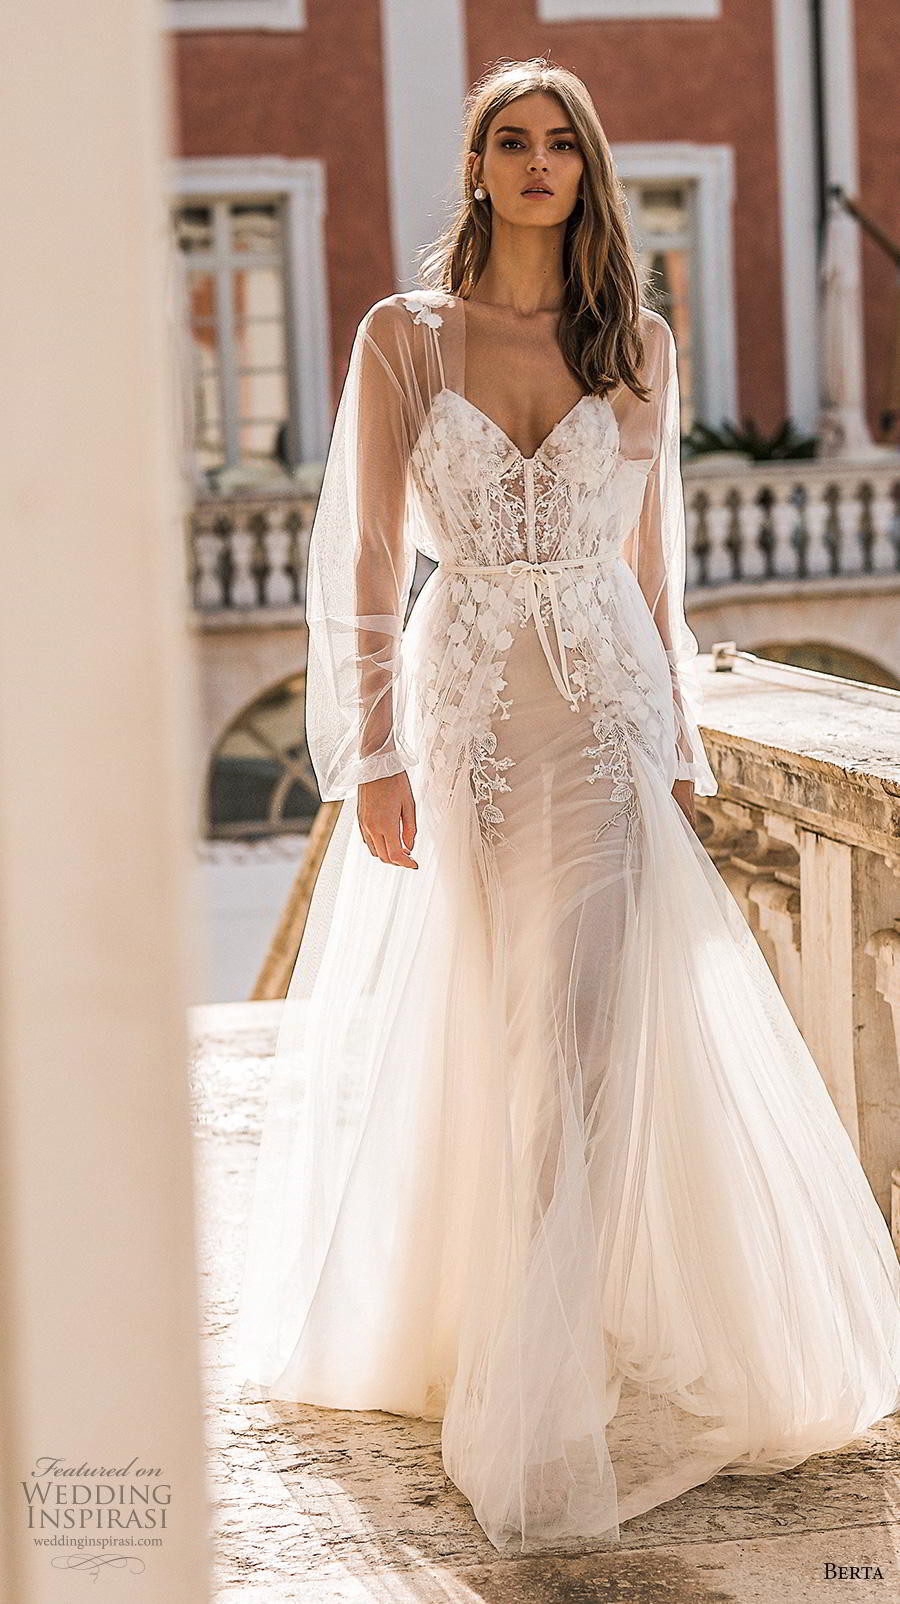 Berta Wedding Dresses Prices
 Berta Privée 2019 Wedding Dresses